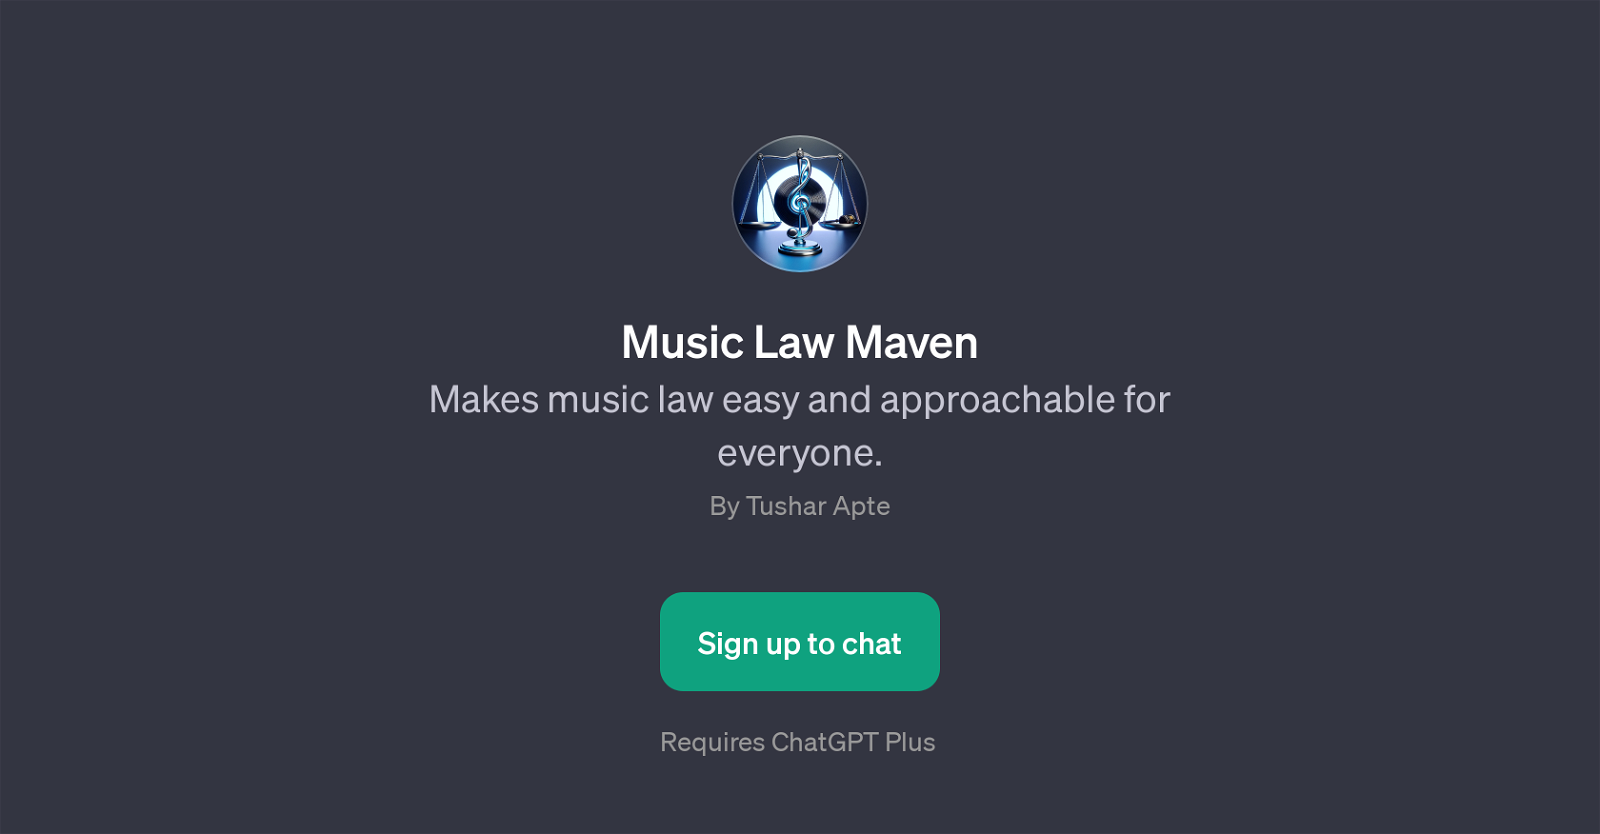 Music Law Maven website